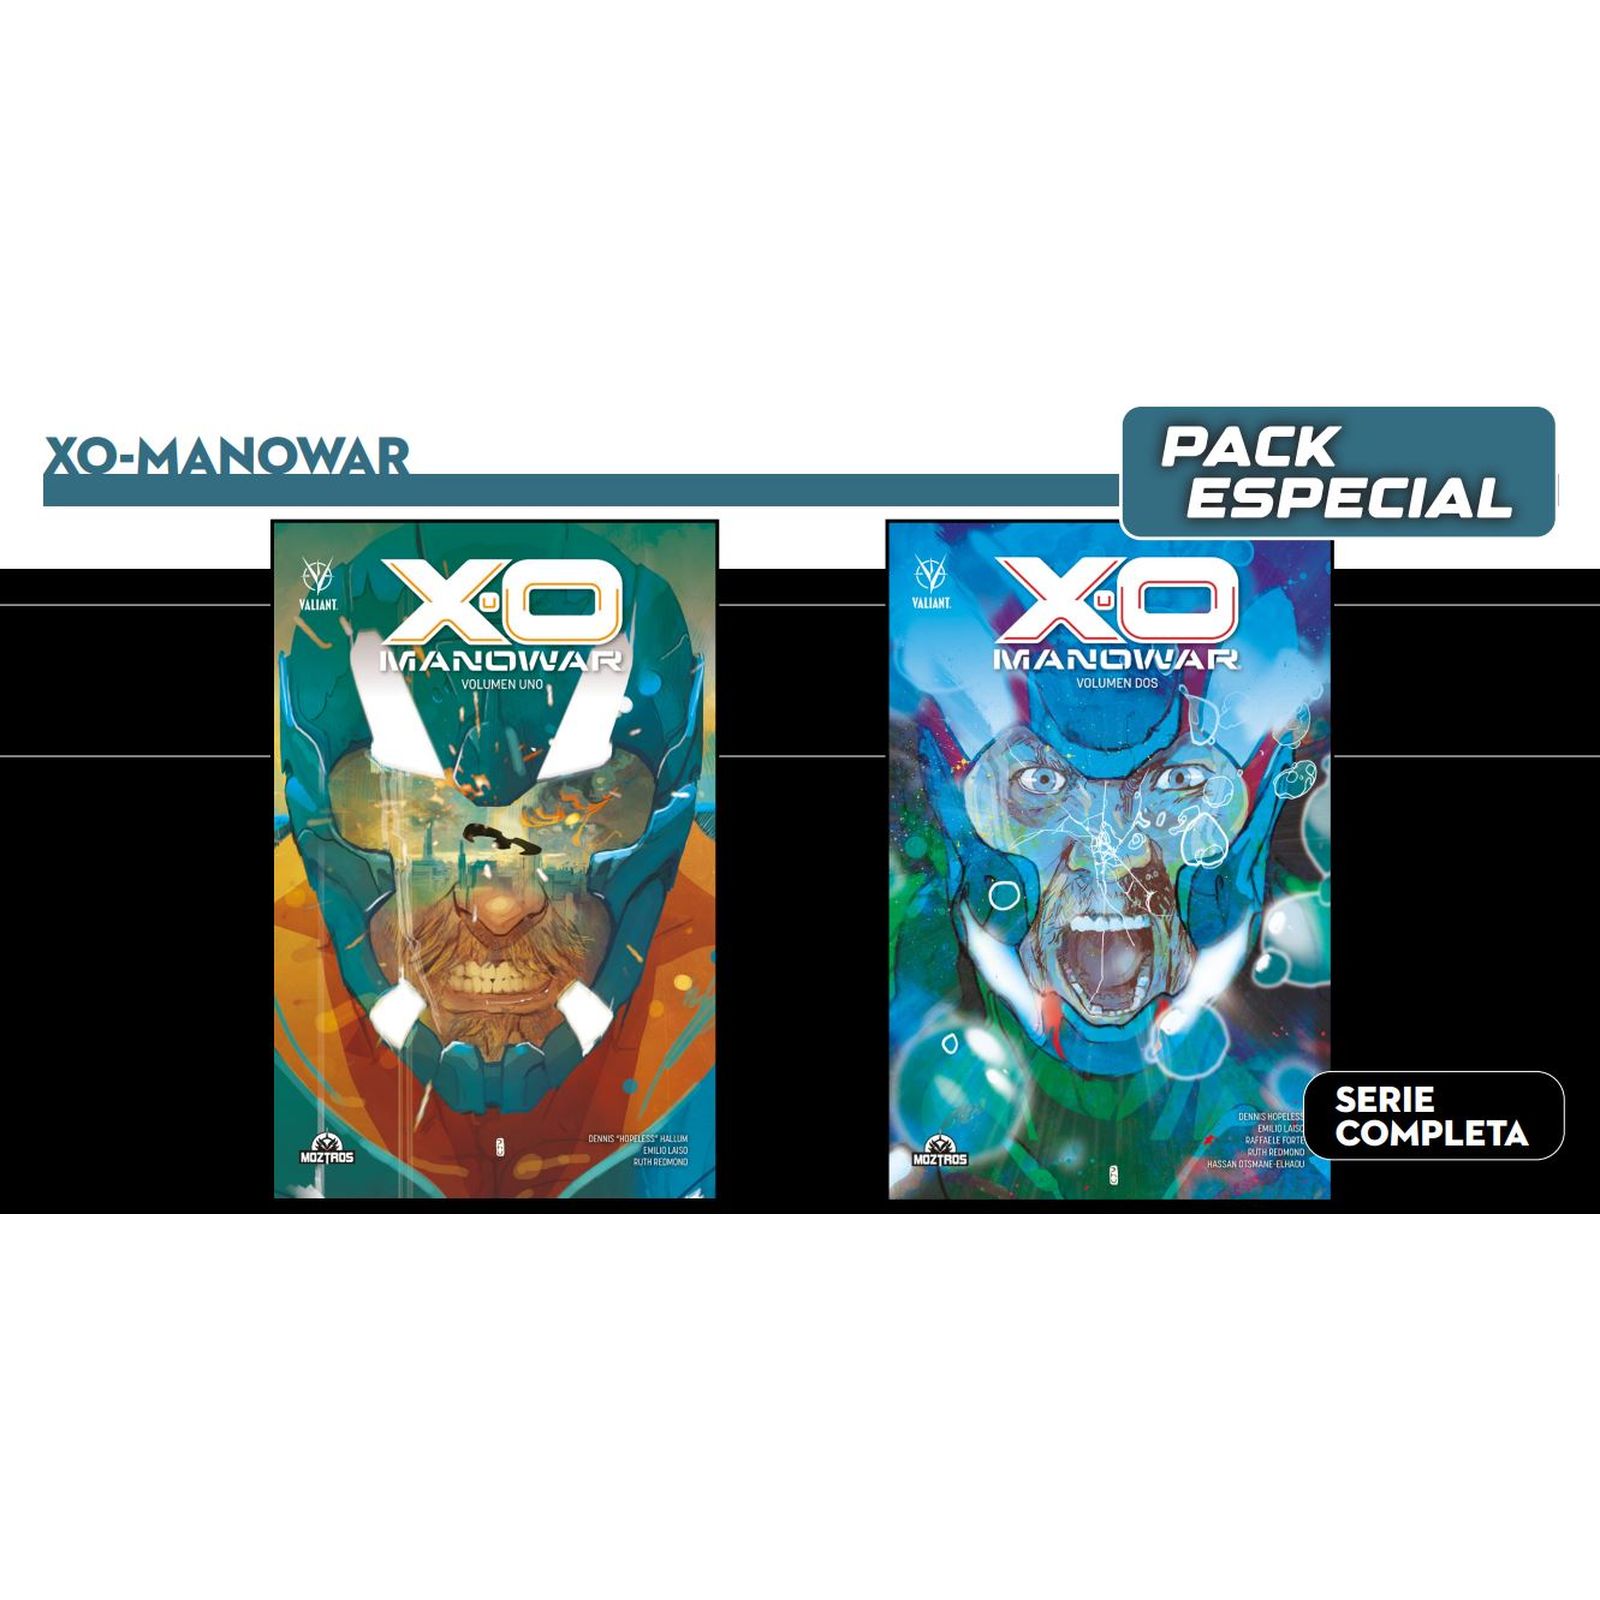 PACK ESPECIAL XO-MANOWAR